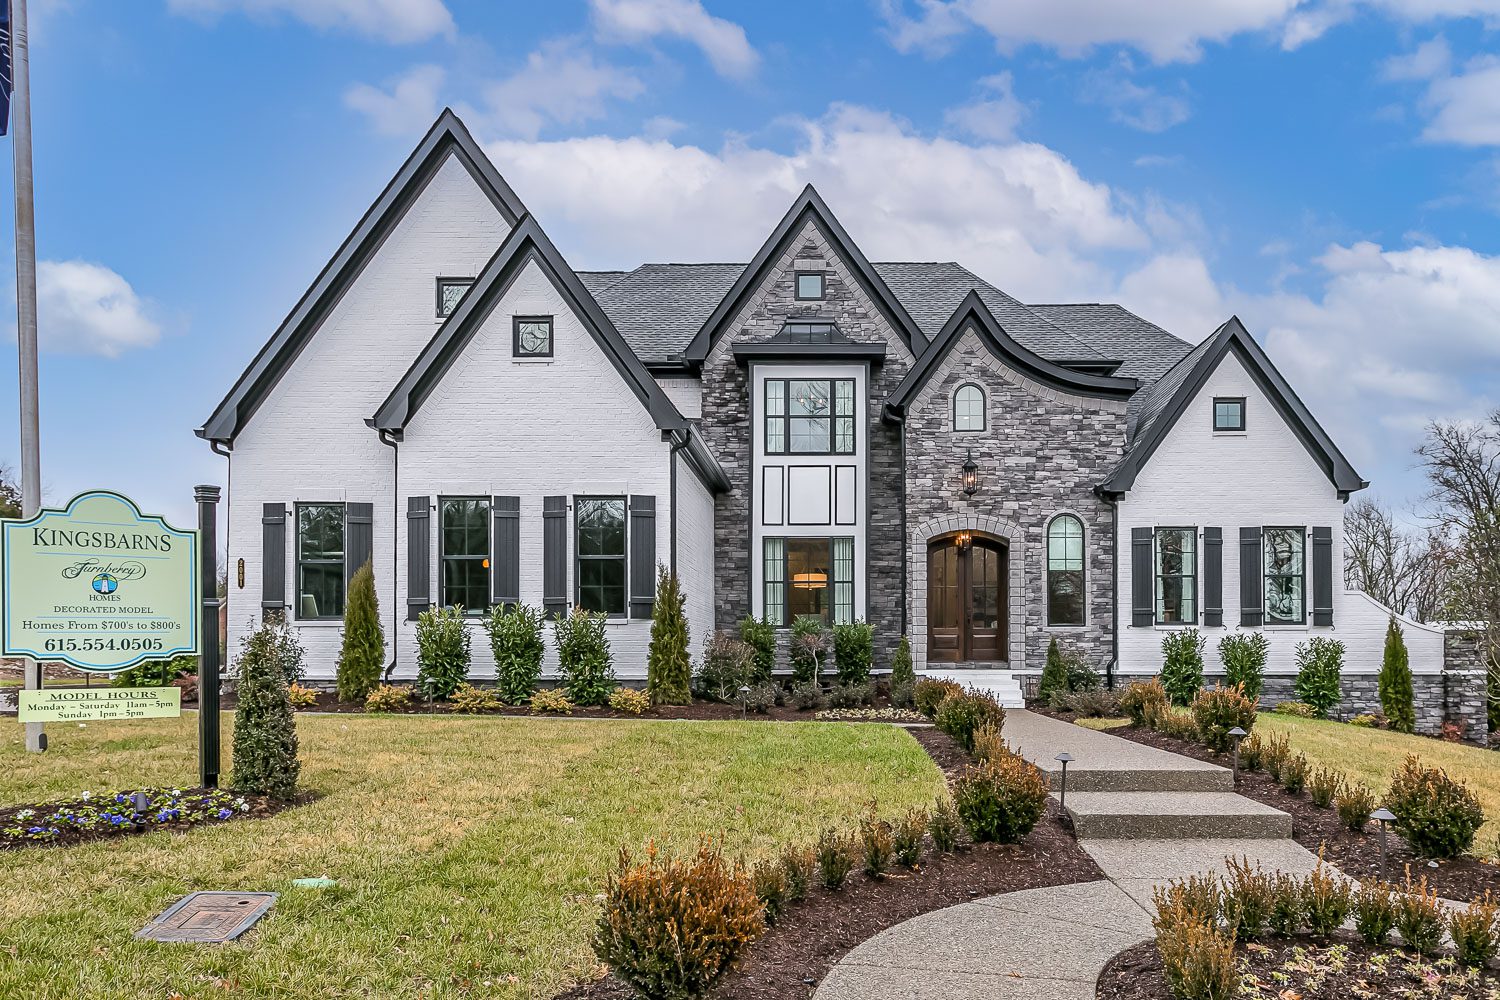 Dream Home Plans - Premier, High-end home builders for luxury homes - luxury home builder | Nashville, TN